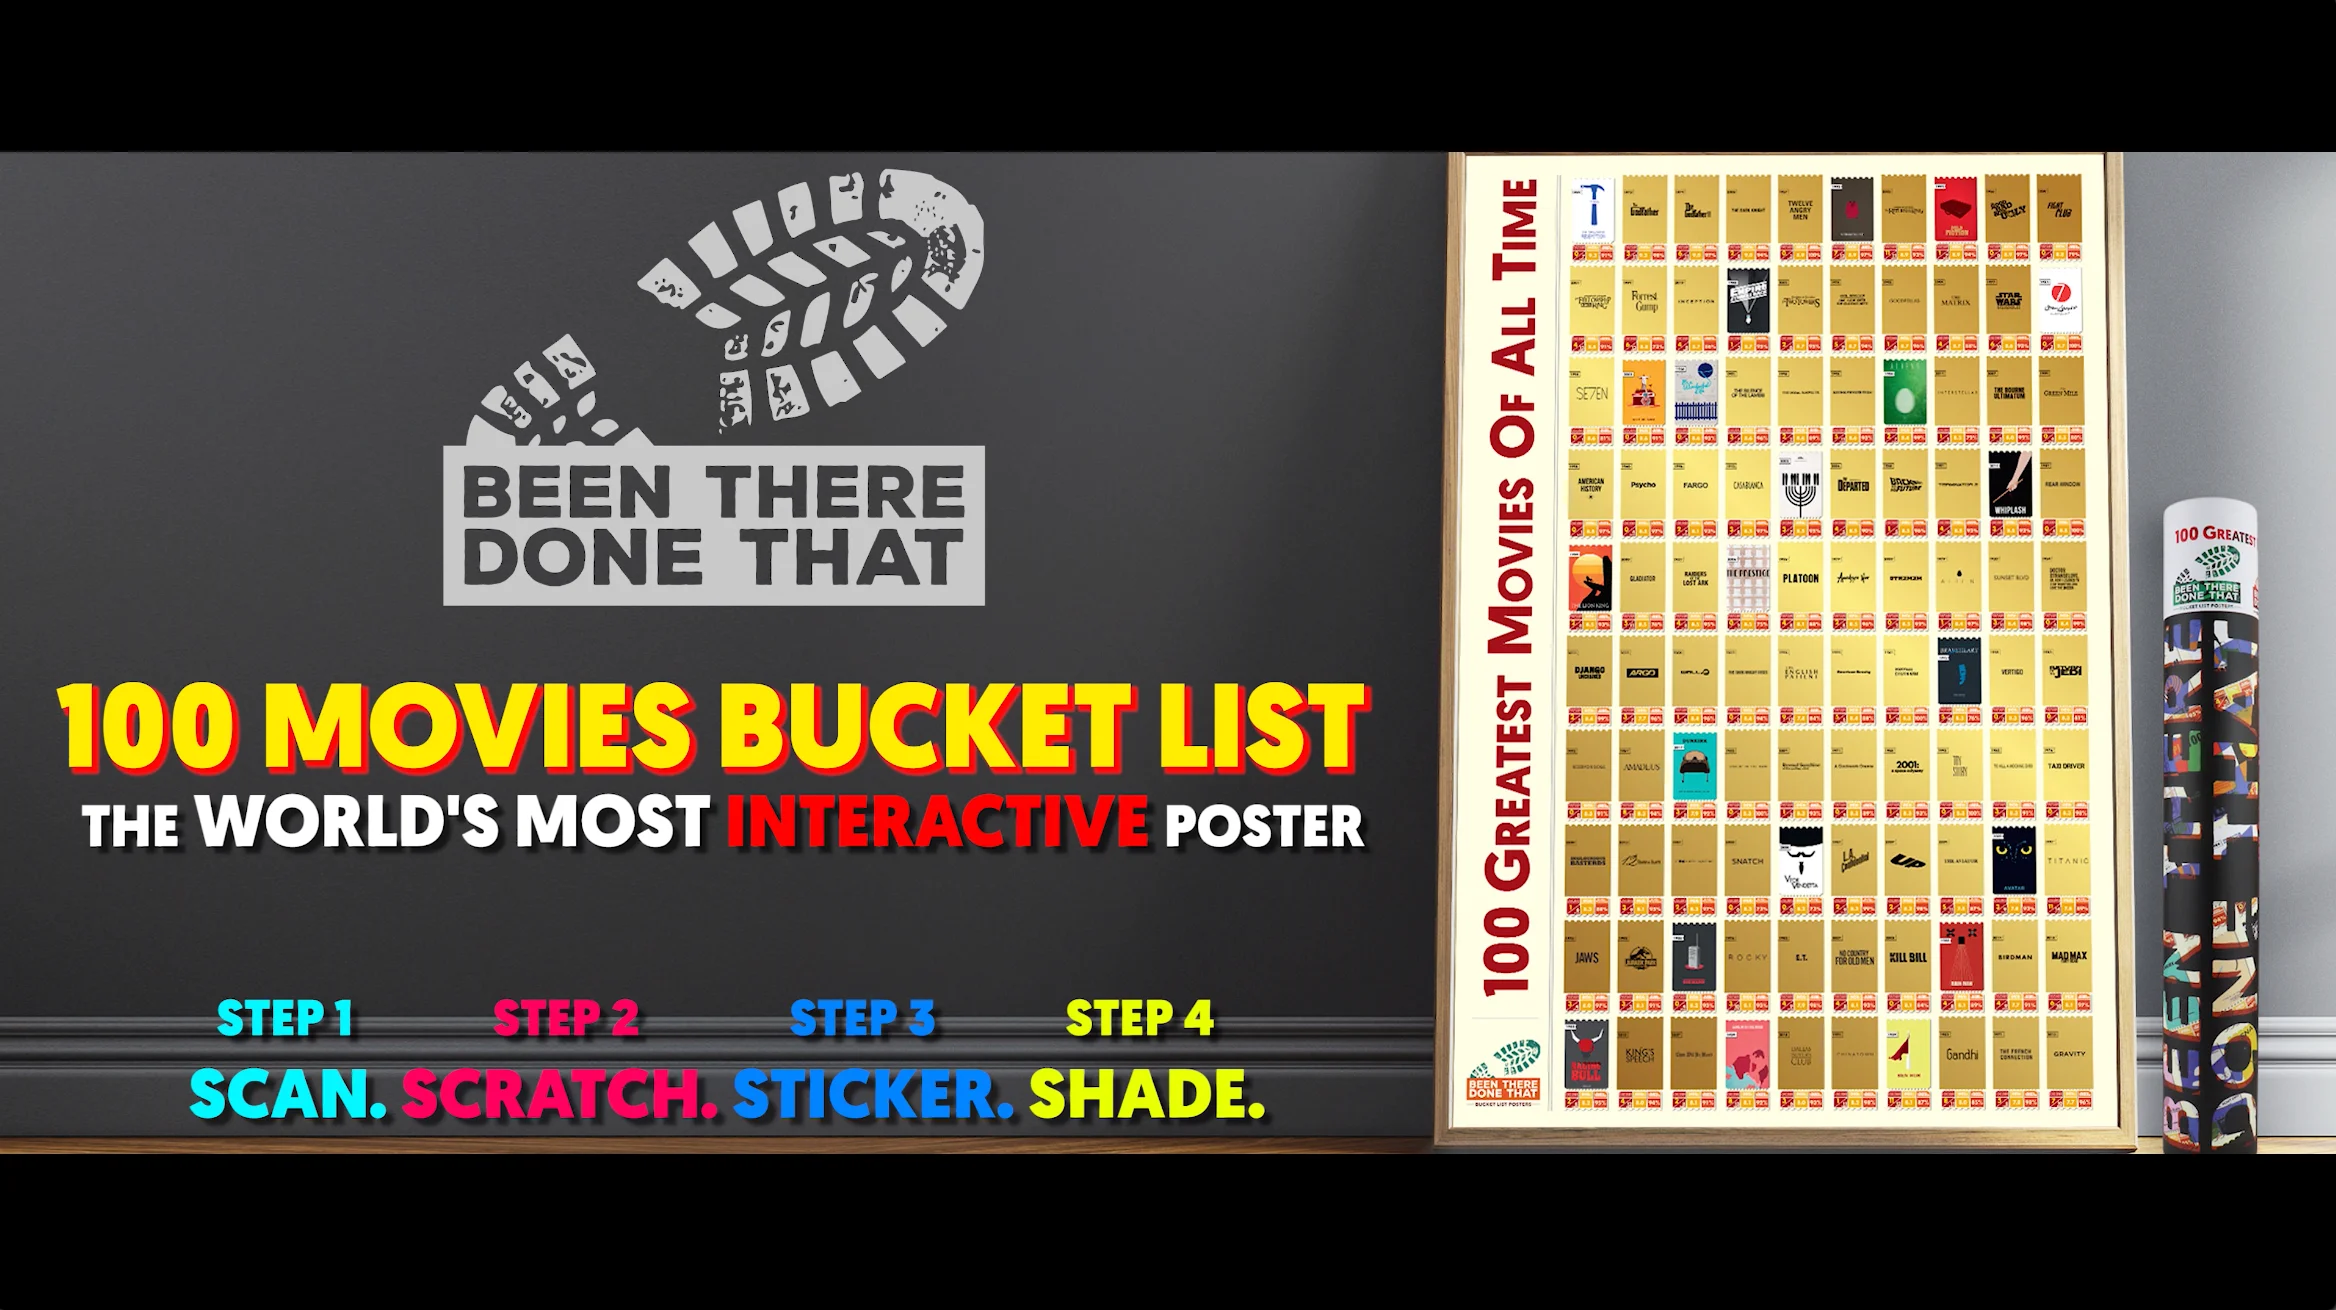 the bucket list movie poster